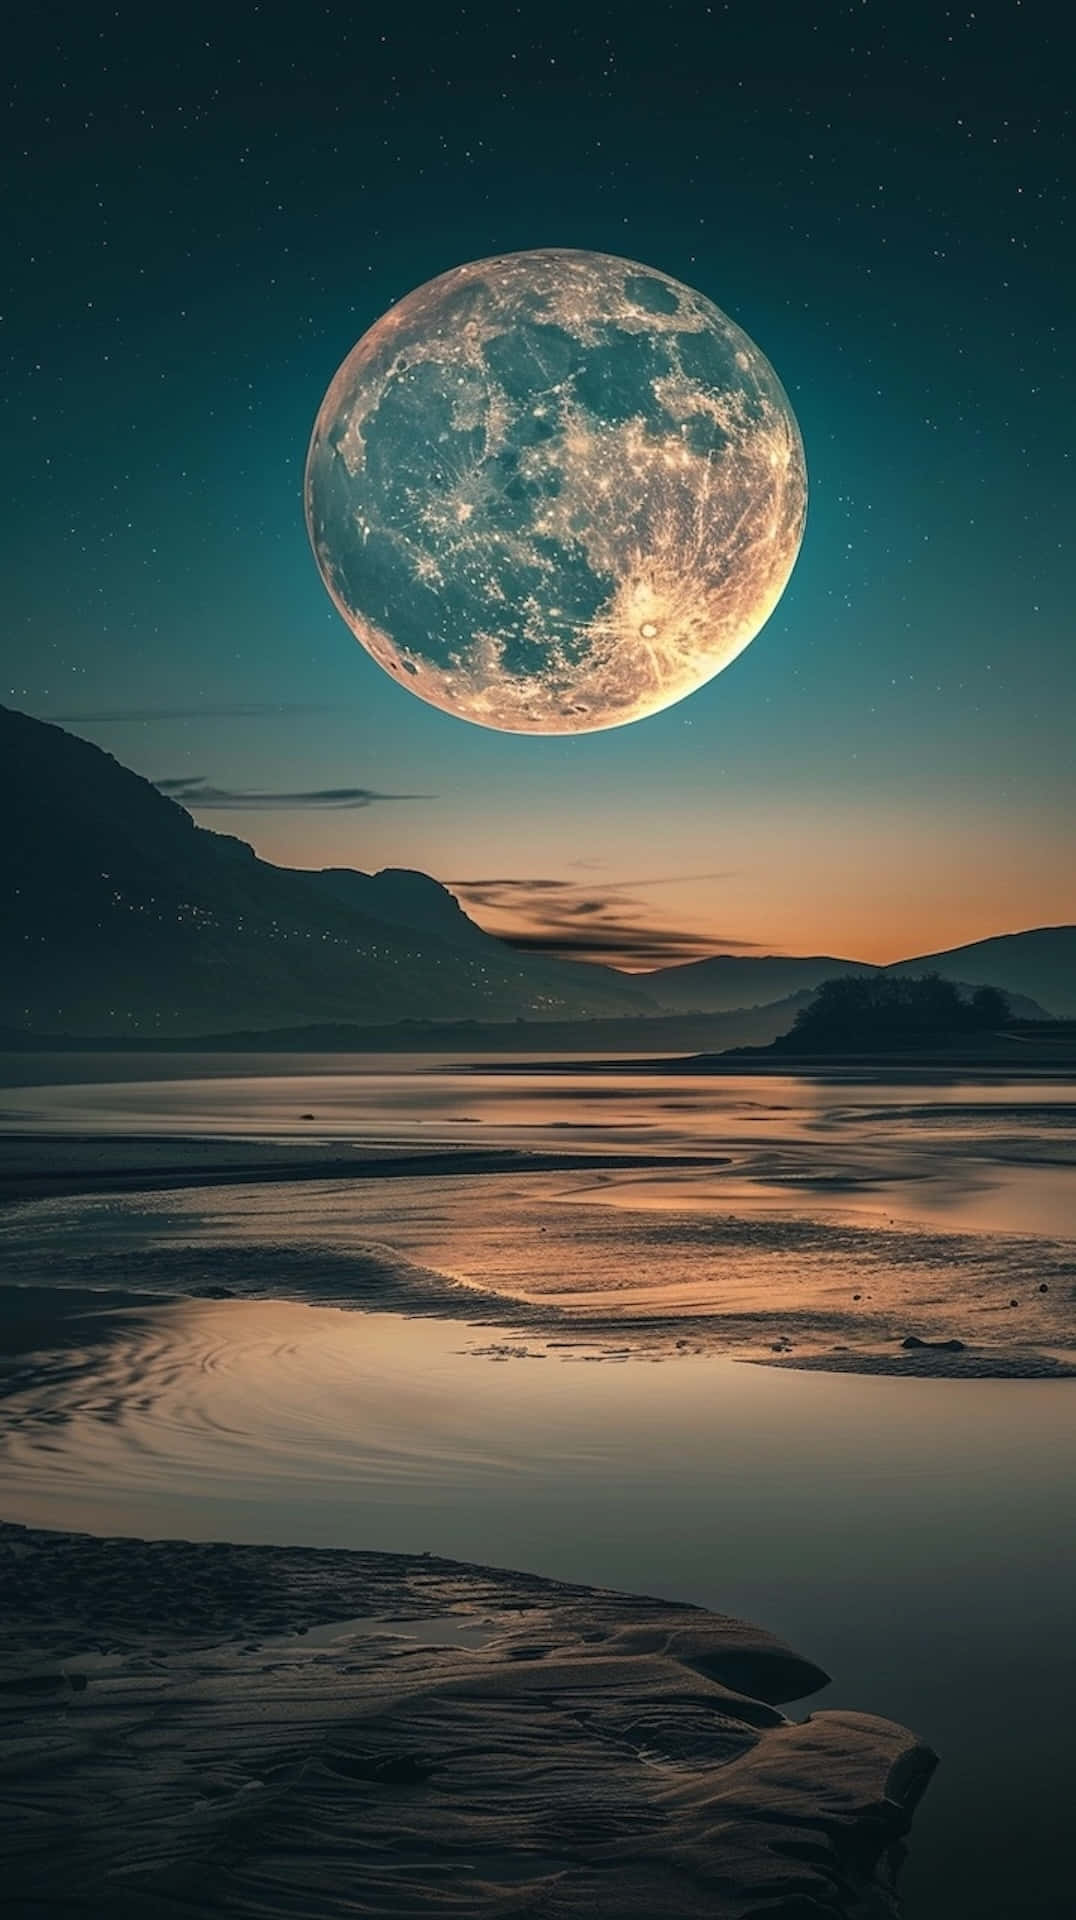 Majestic Moonrise Over Serene Landscape.jpg Wallpaper